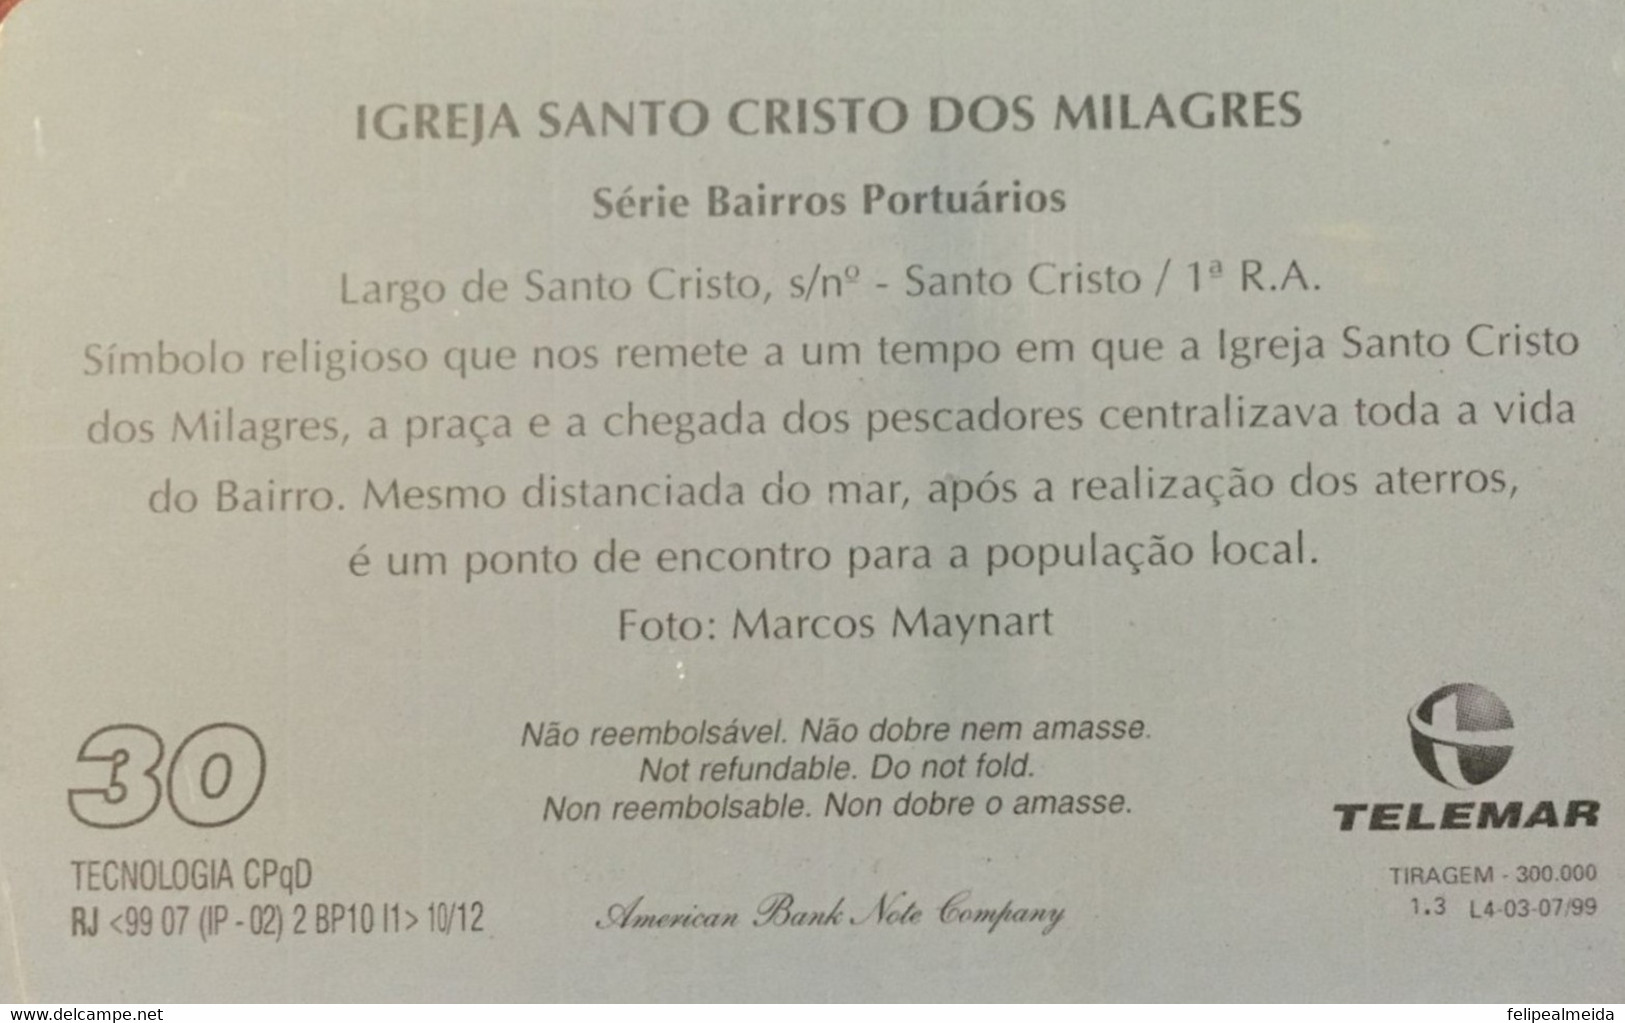 Phone Card Produced By Telemar In 1999 - Bairros Portuários Series - Santo Cristo Dos Milagres Church - Cultural